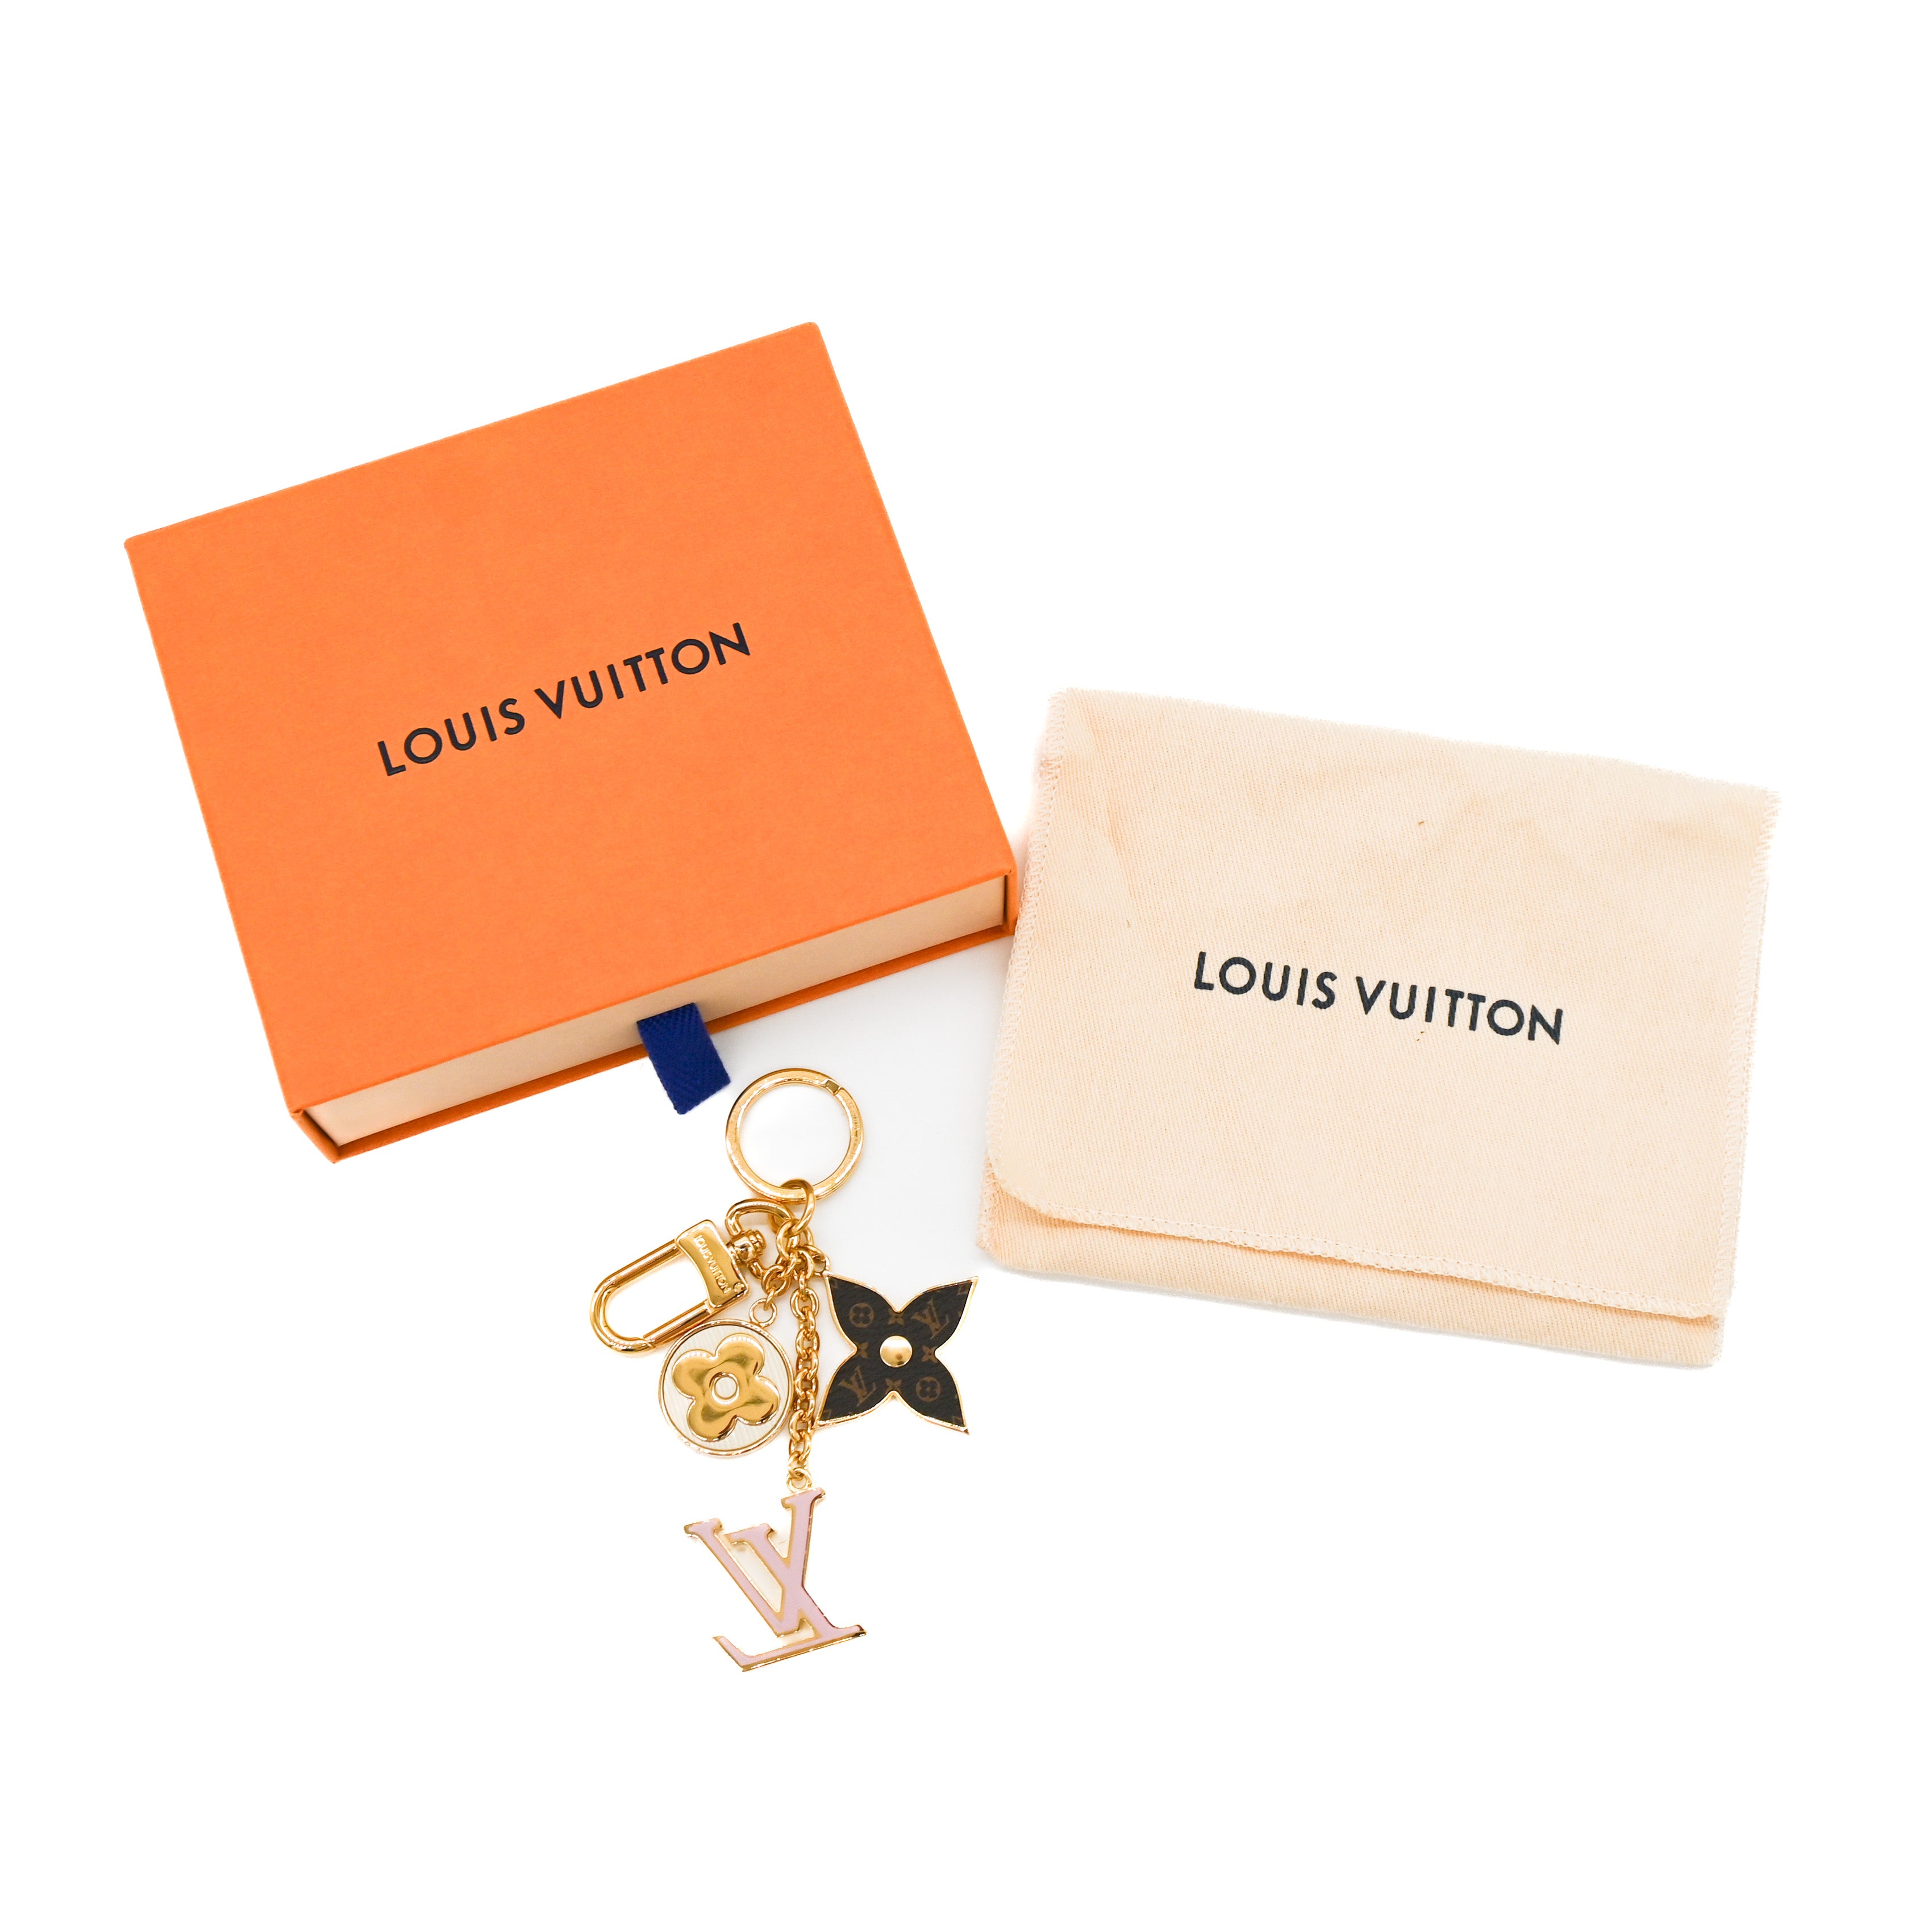 LOUIS VUITTON Louis Vuitton Spring Street Bag Charm and Key Holder - Vault 55